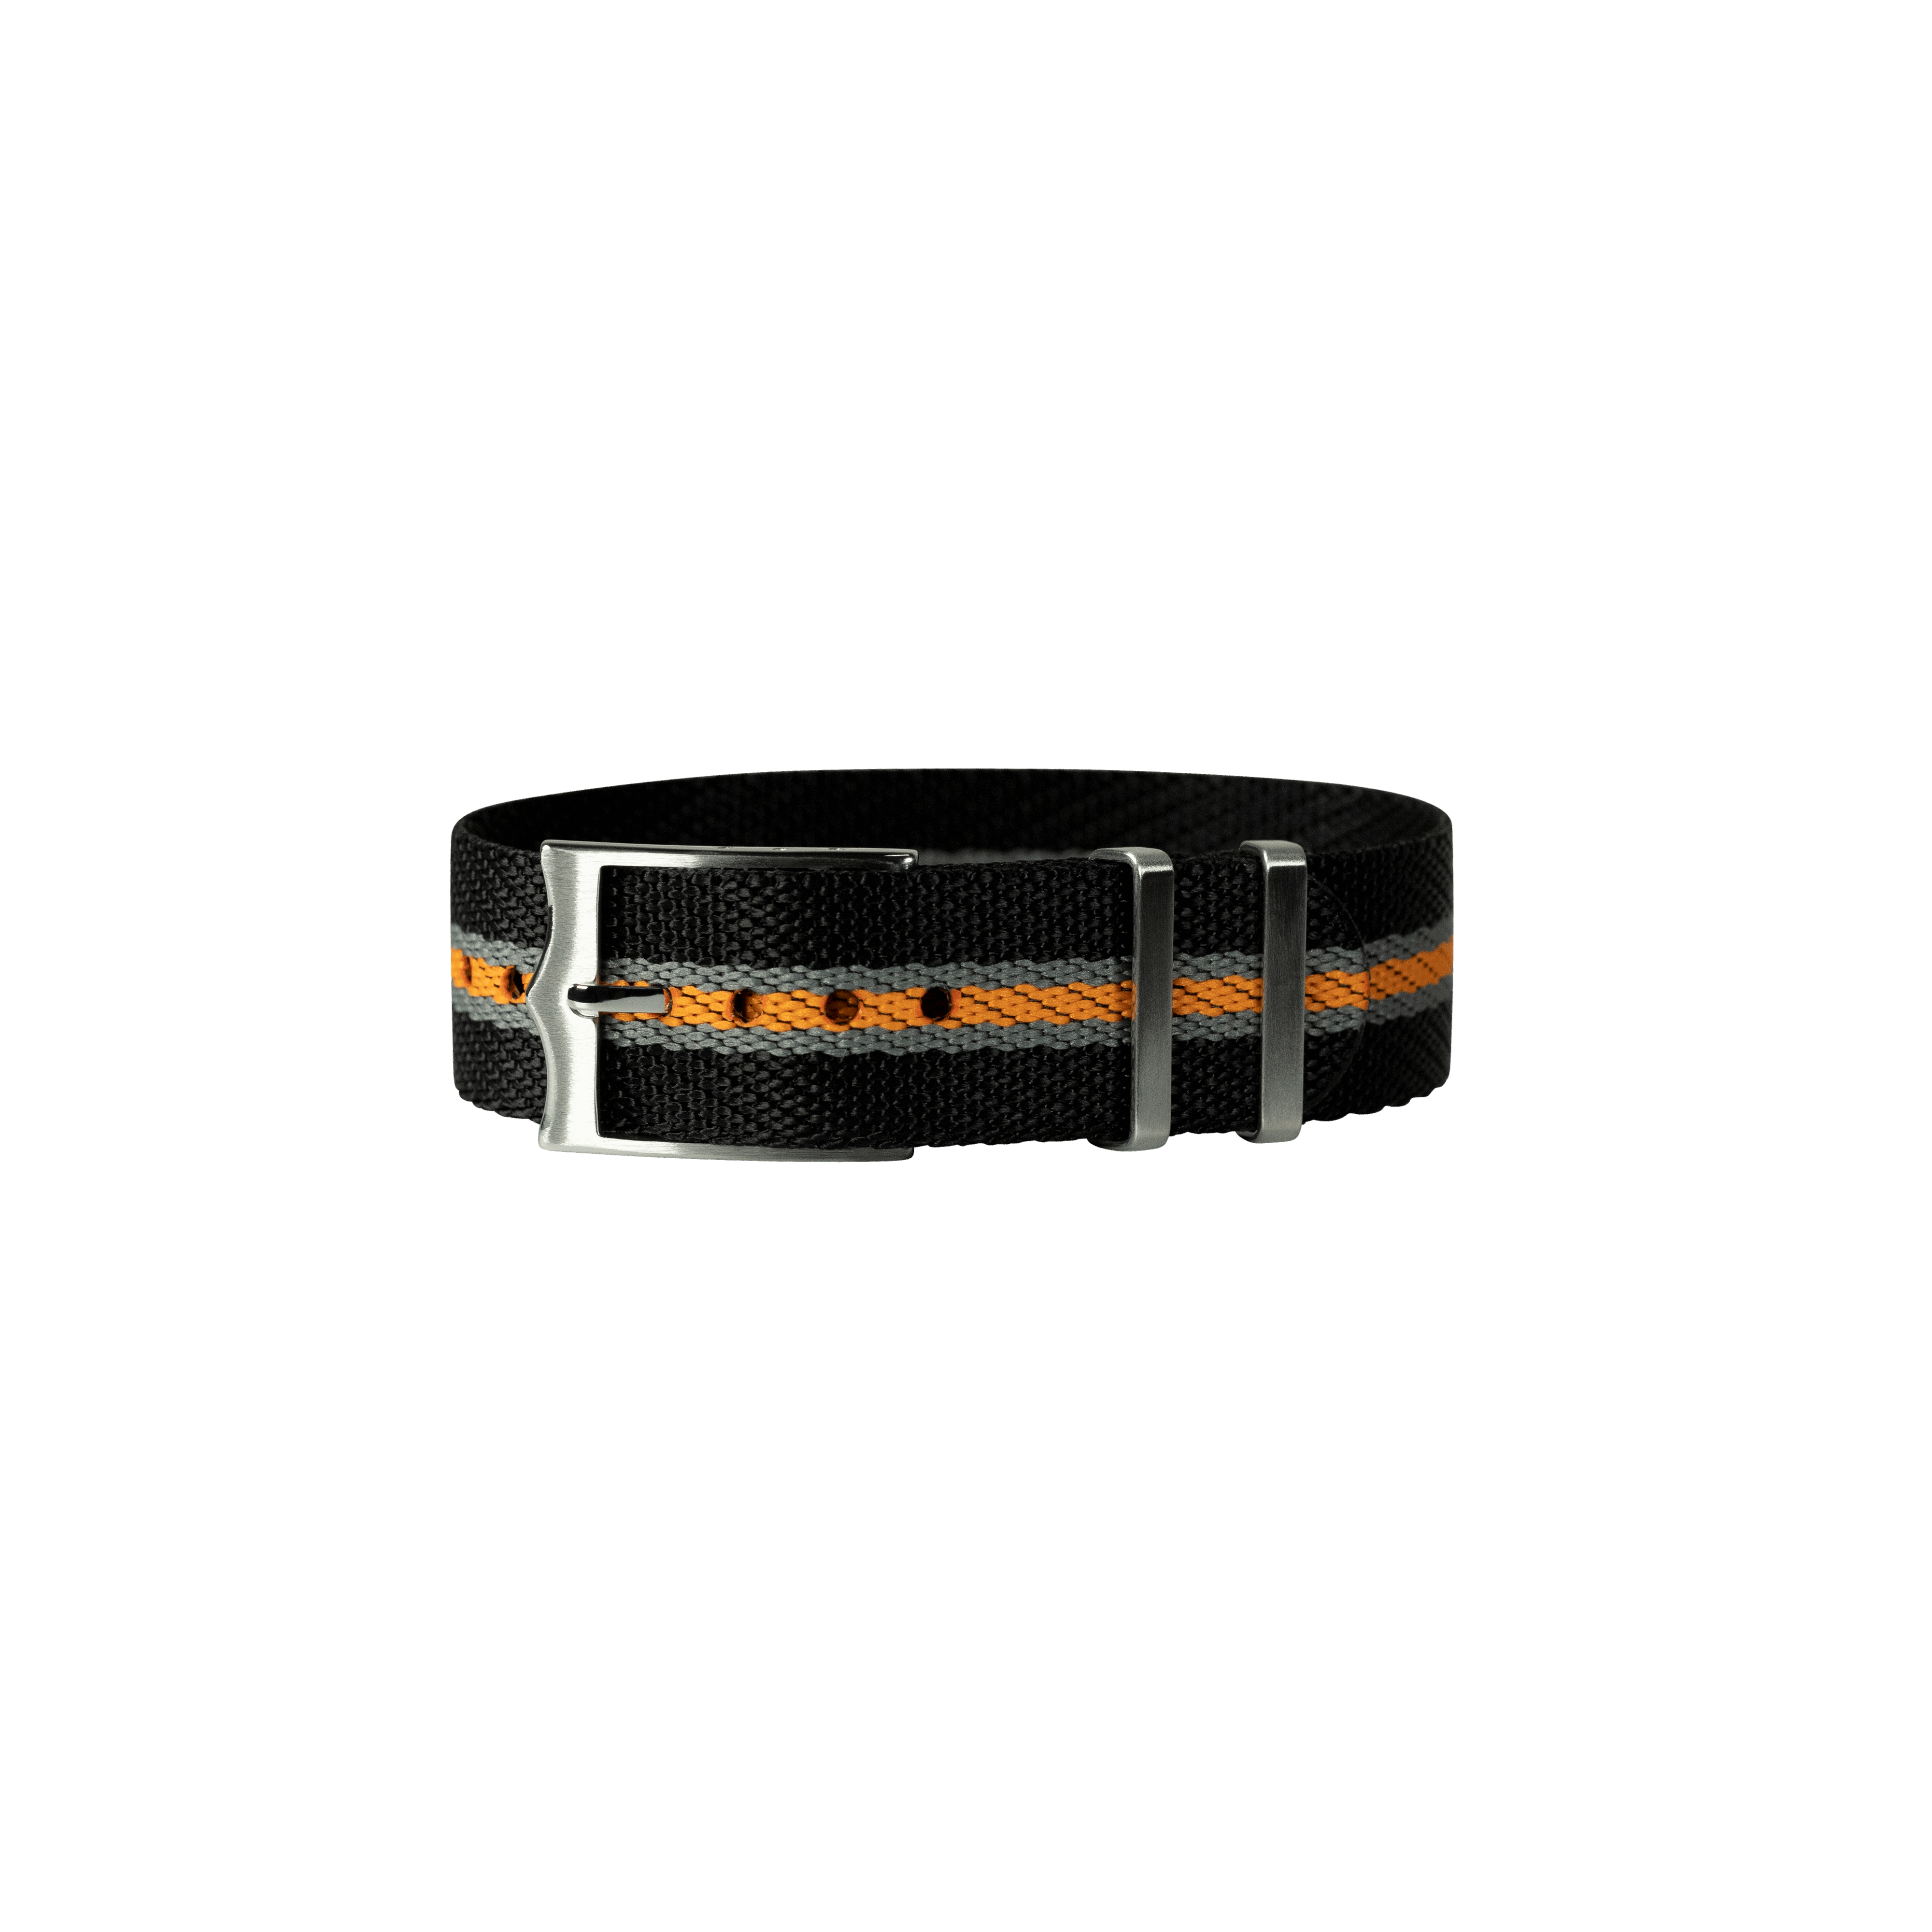 Cross Militex (Adjustable) - Black / Grey / Orange